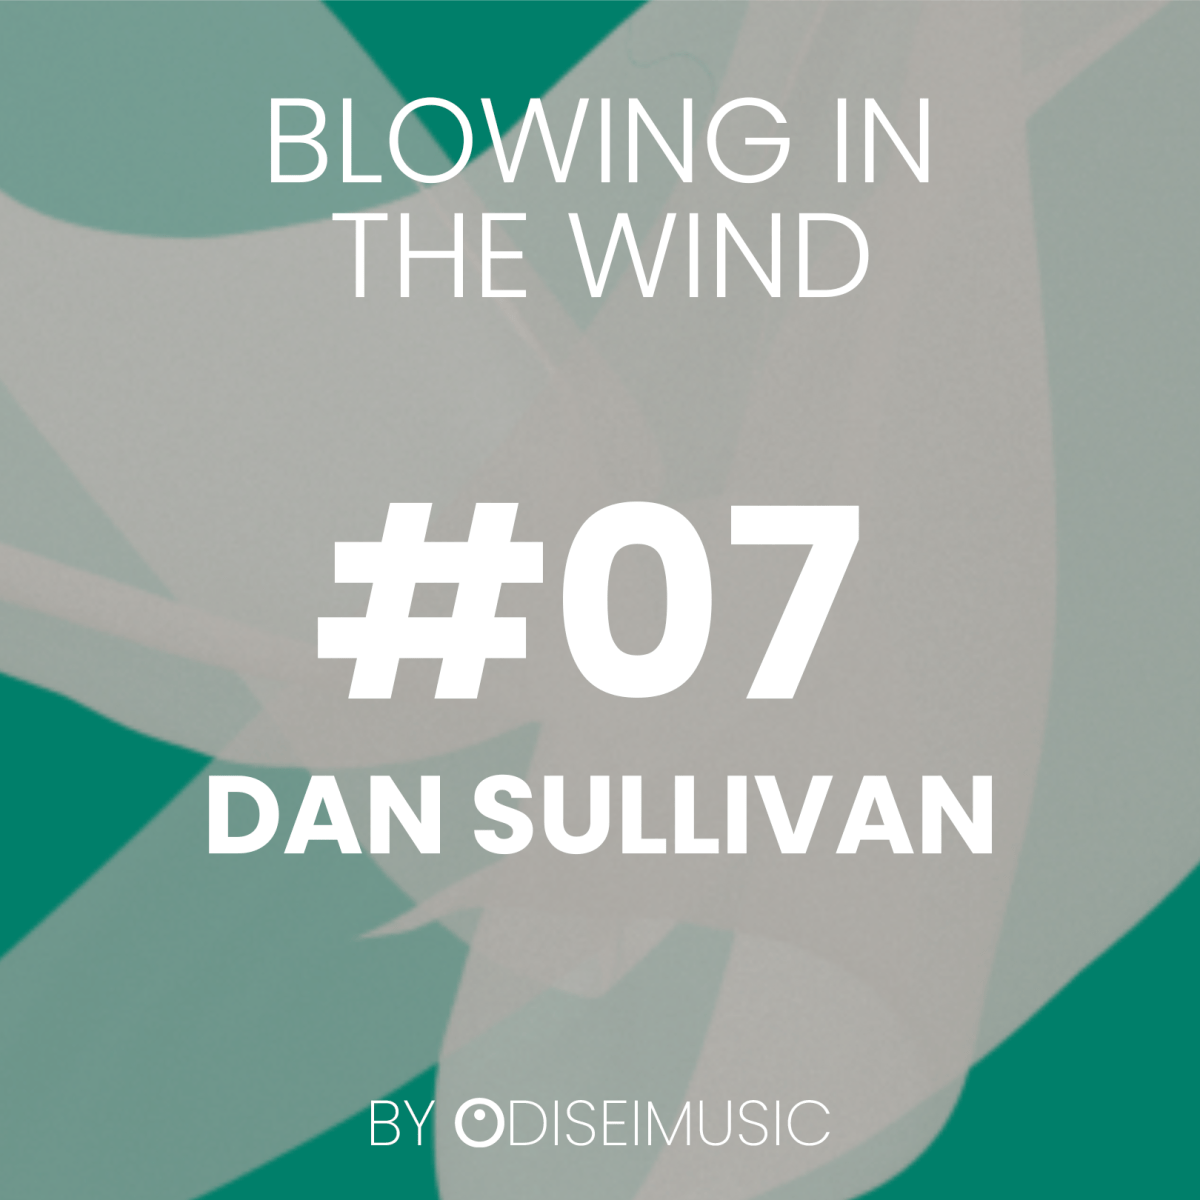 #07 Dan Sullivan – The JamStick inventor